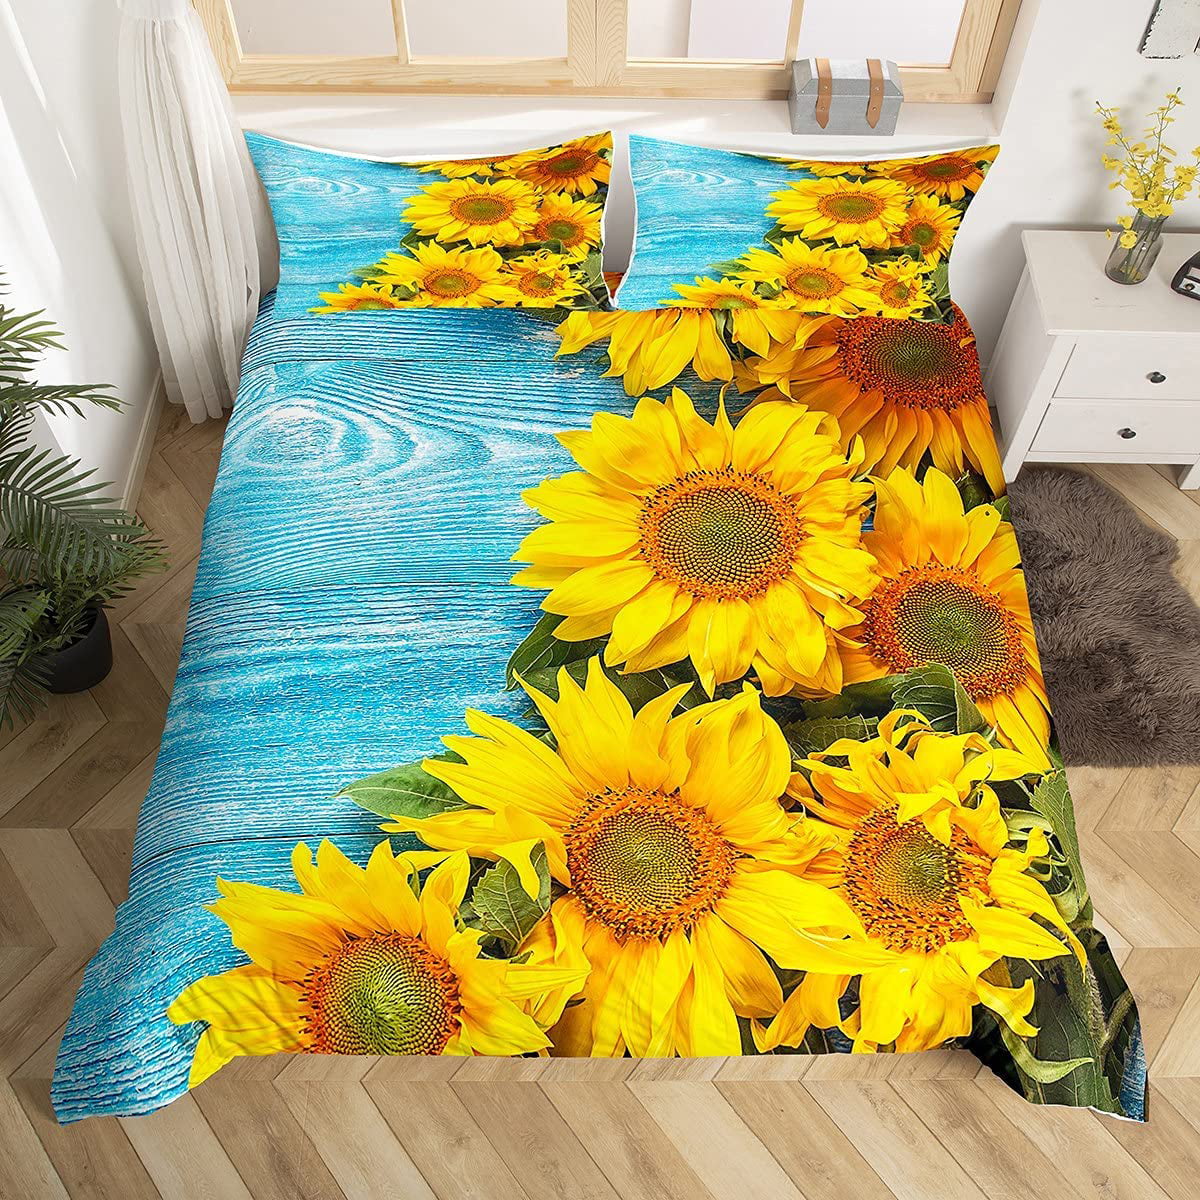 Sunflowers Yellow Ruffles Bedspread Sheet Set New Girls Home Bedding Colcha 